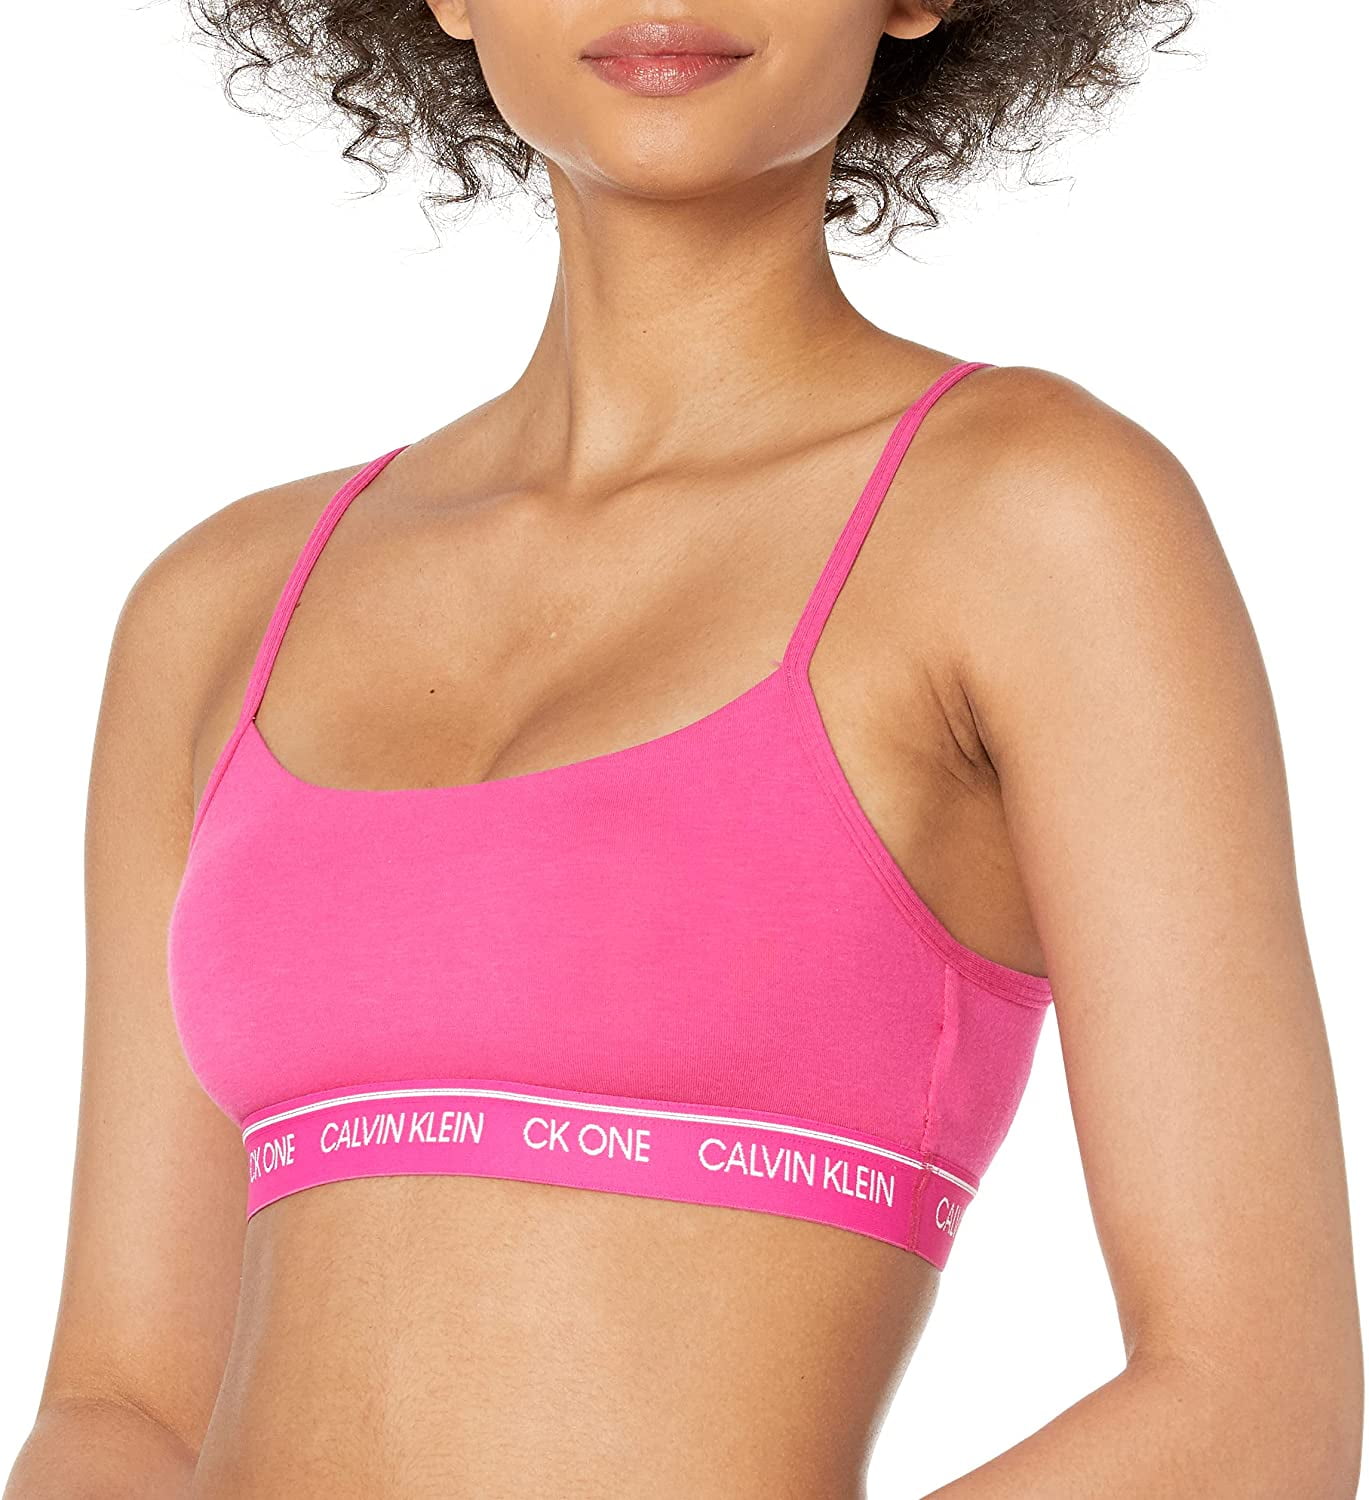 Calvin Klein CK One Logo lace sheer unlined demi bra in hot pink